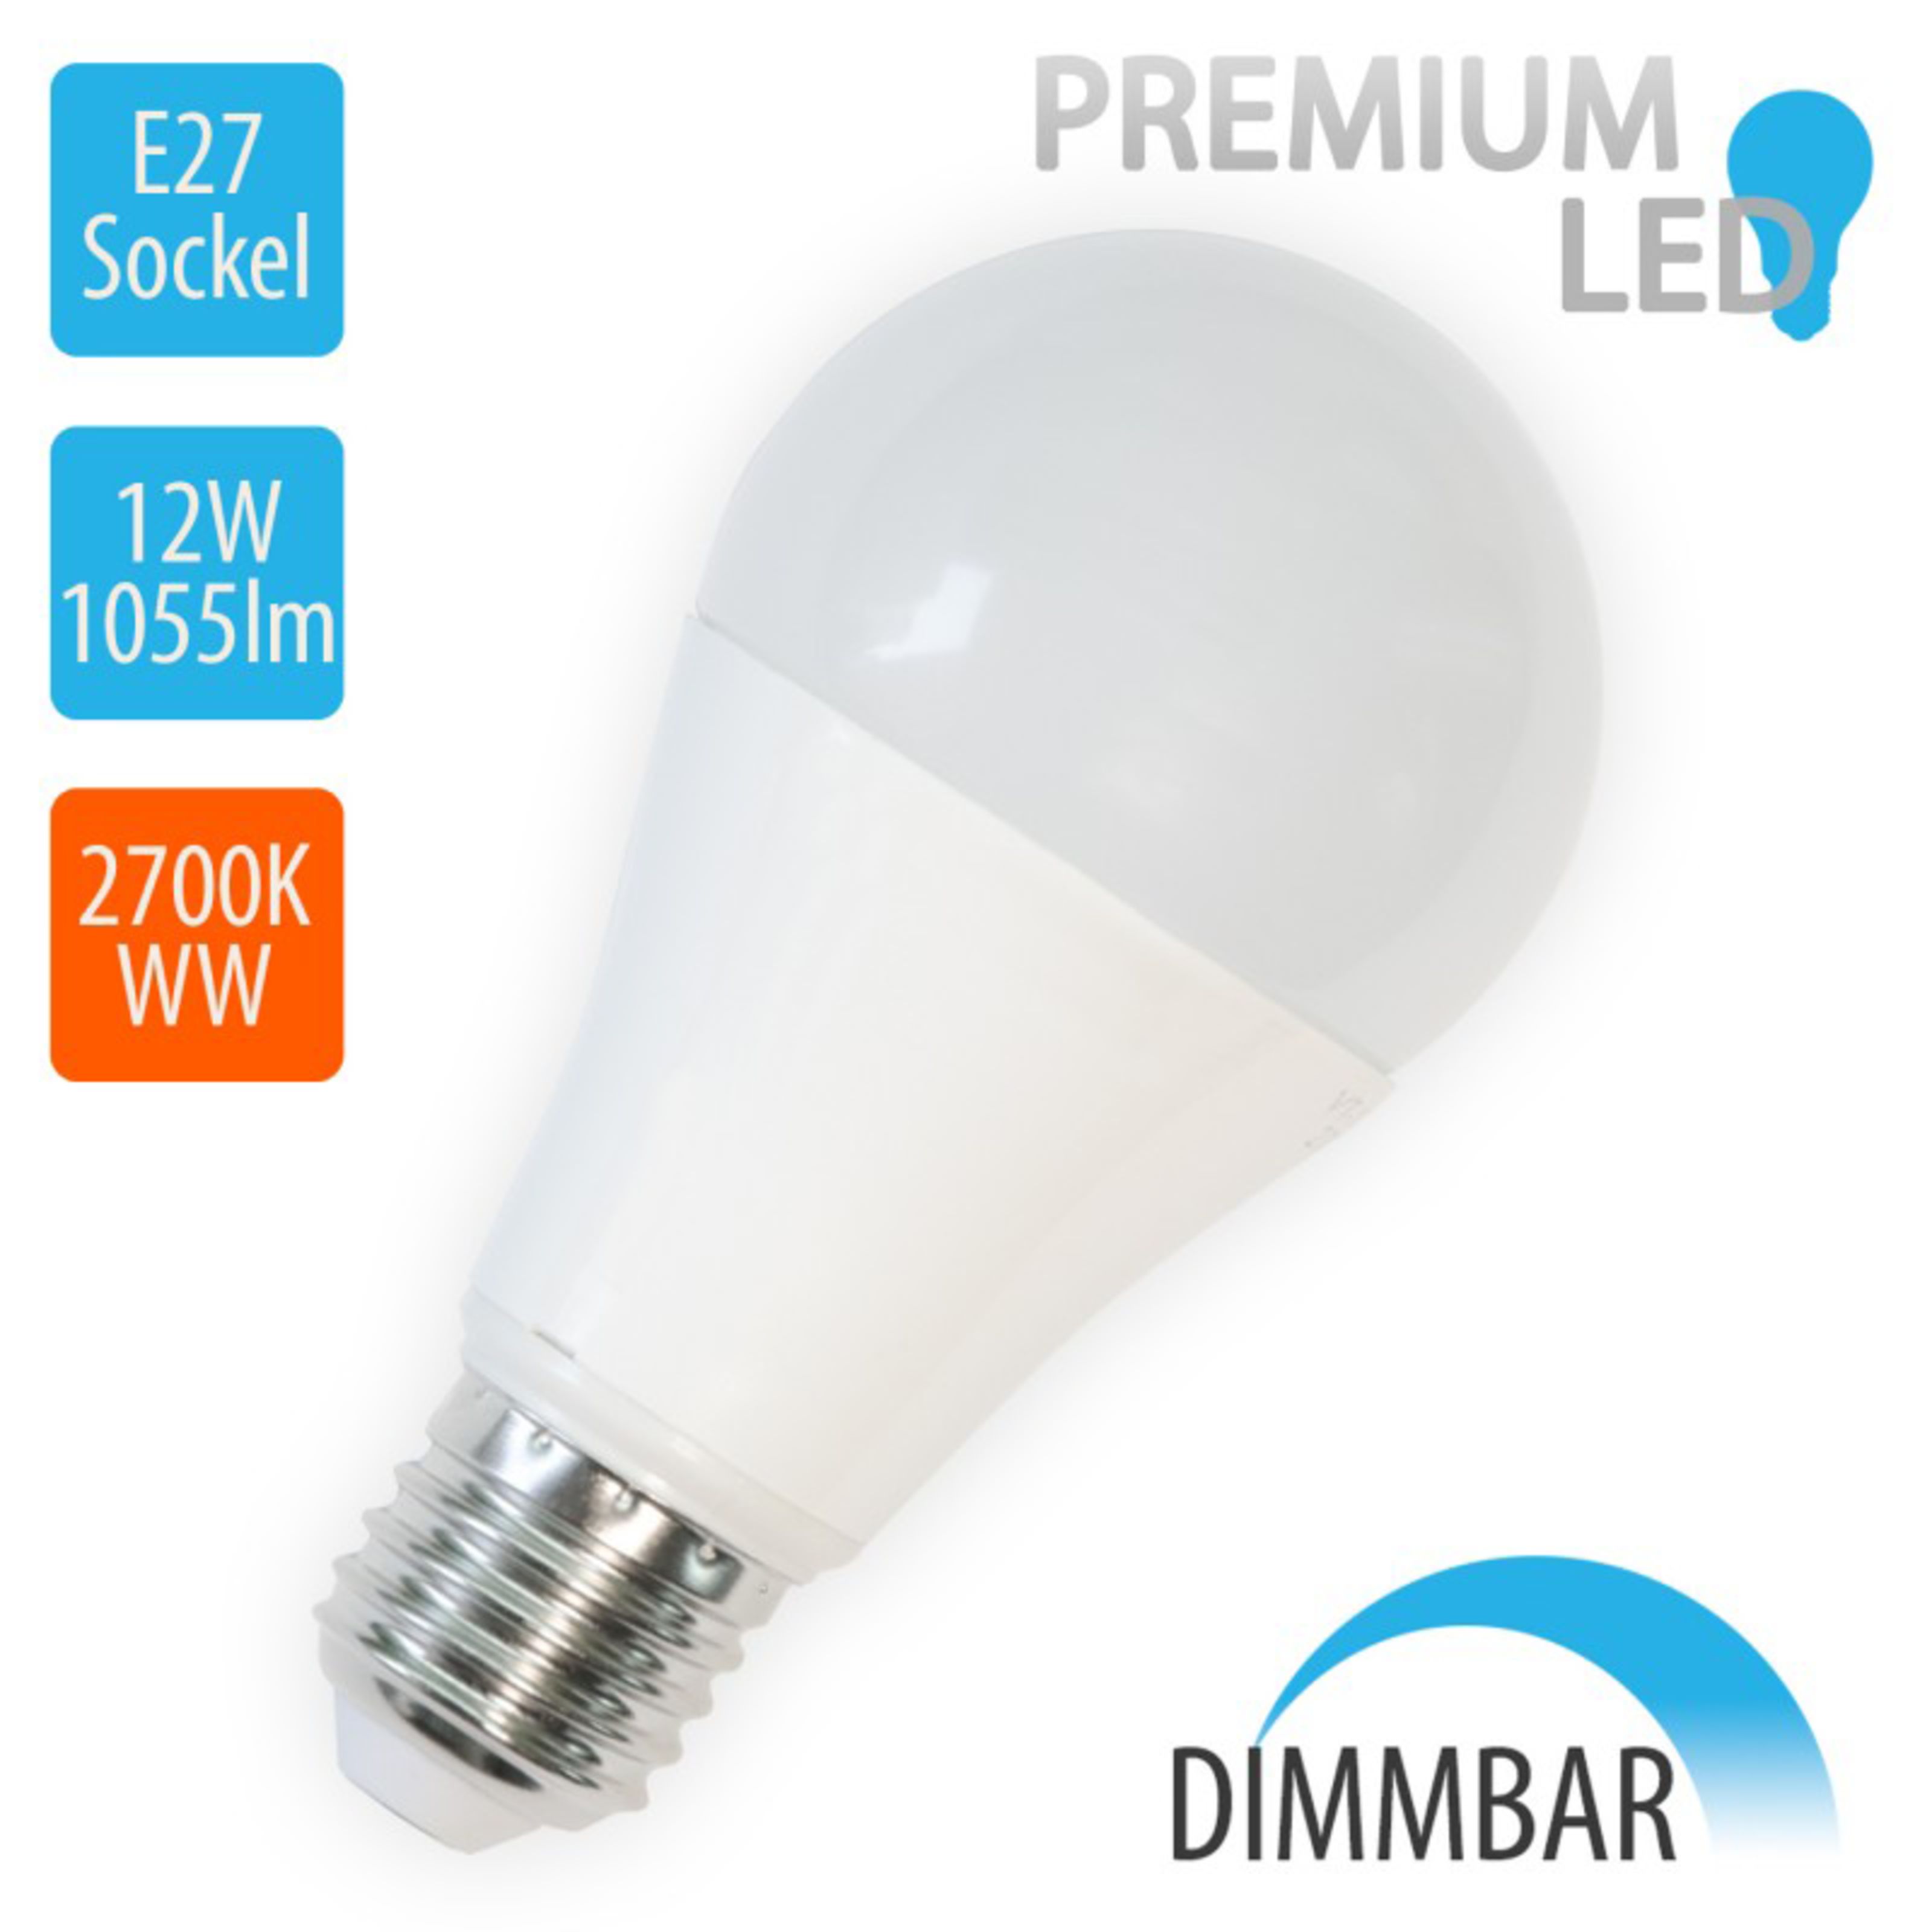 V-TAC - 12W LED E27 A60 Globe DIMMBAR, 2700K Warmweiß,1055lm